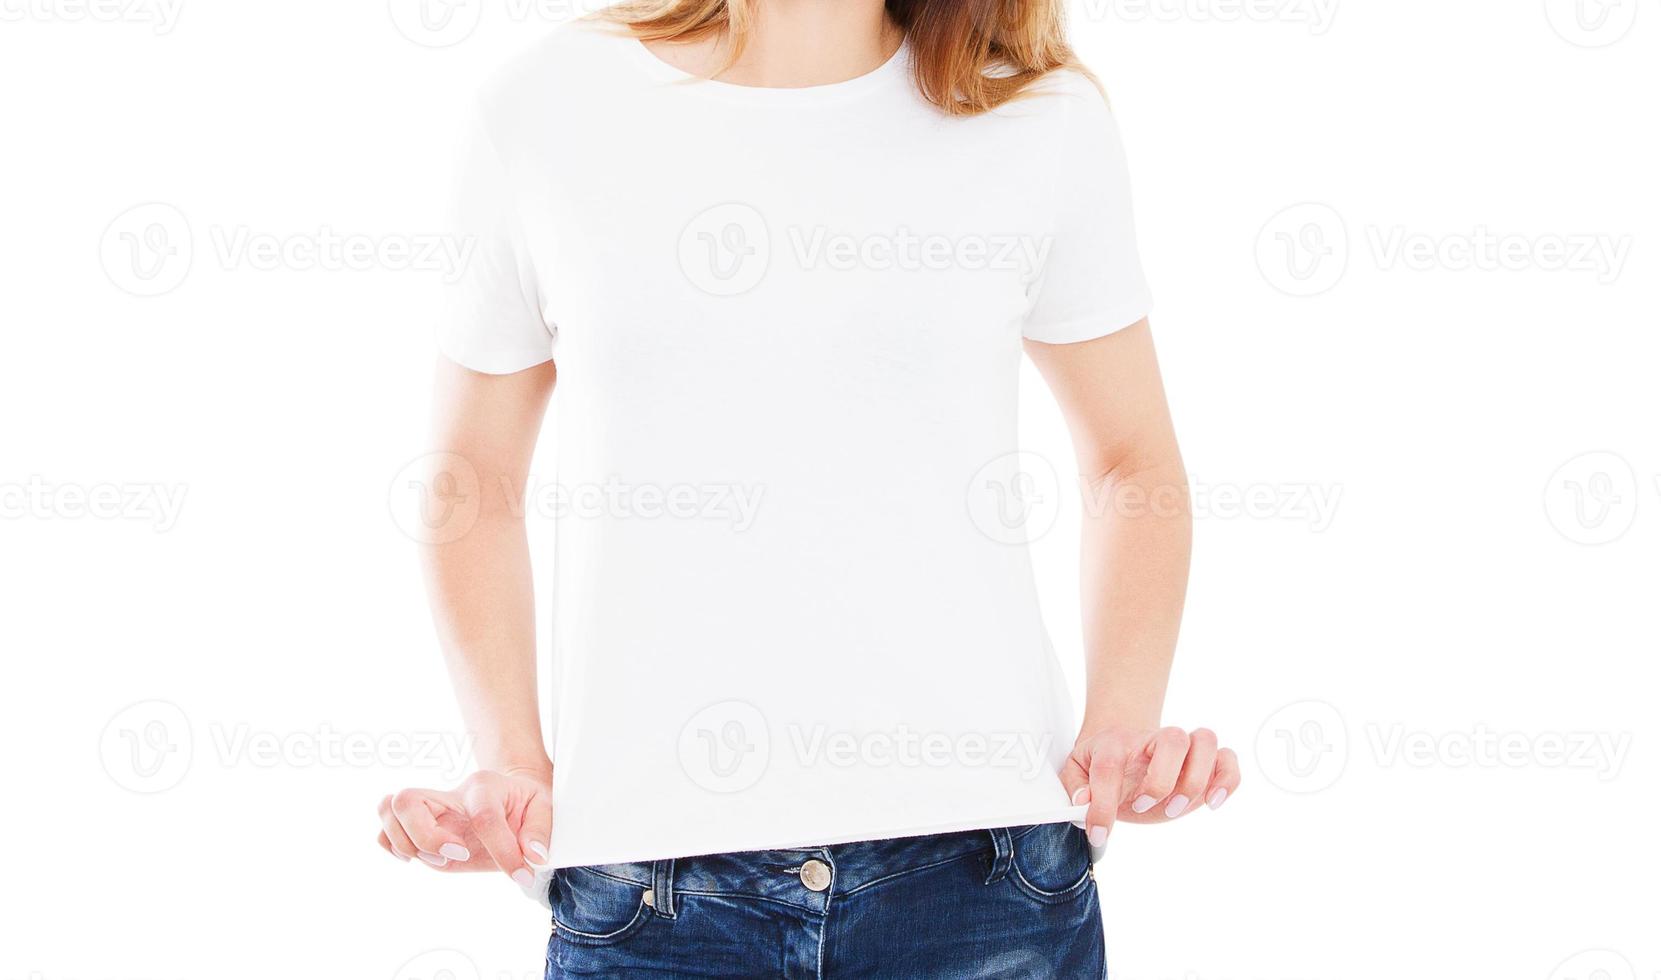 Camiseta de cerca - chica en camiseta maqueta aislado sobre blanco foto